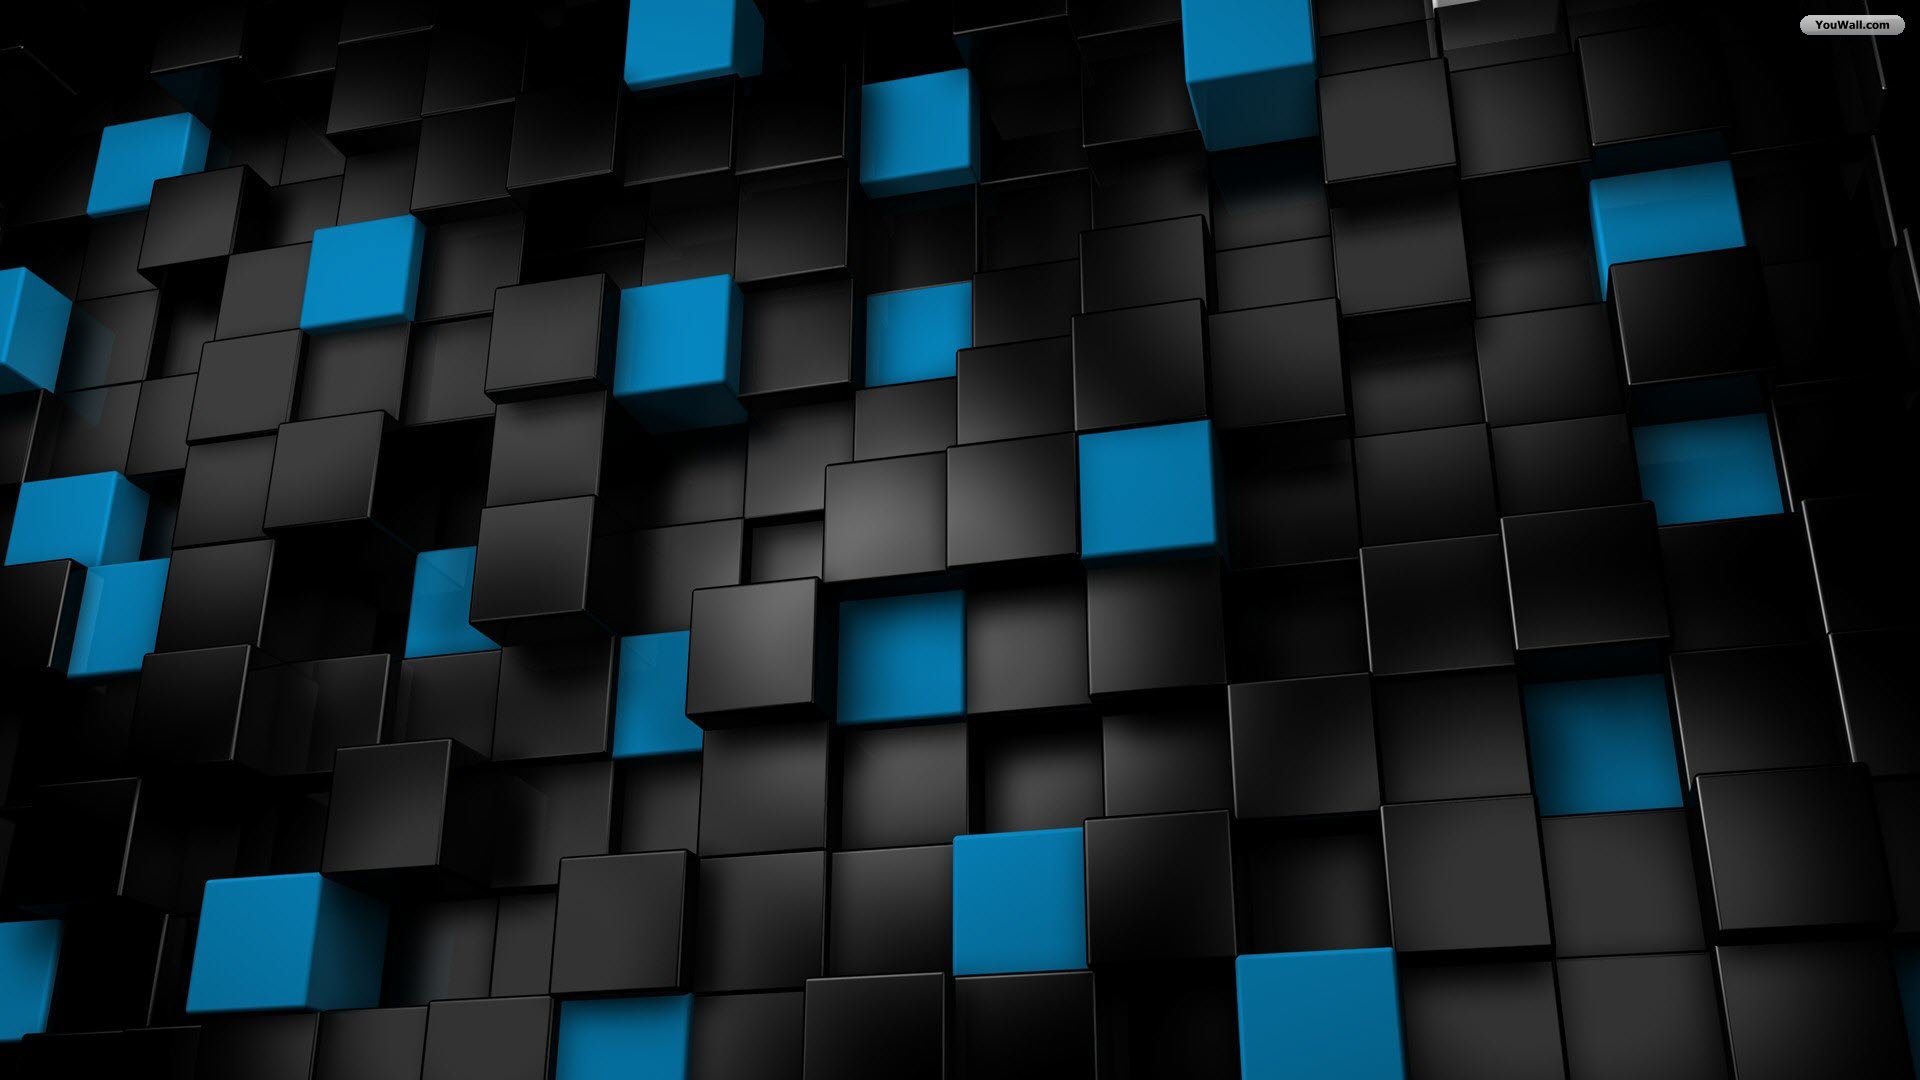 Black and Blue Cubes Wallpaper   wallpaperwallpapersfree wallpaper